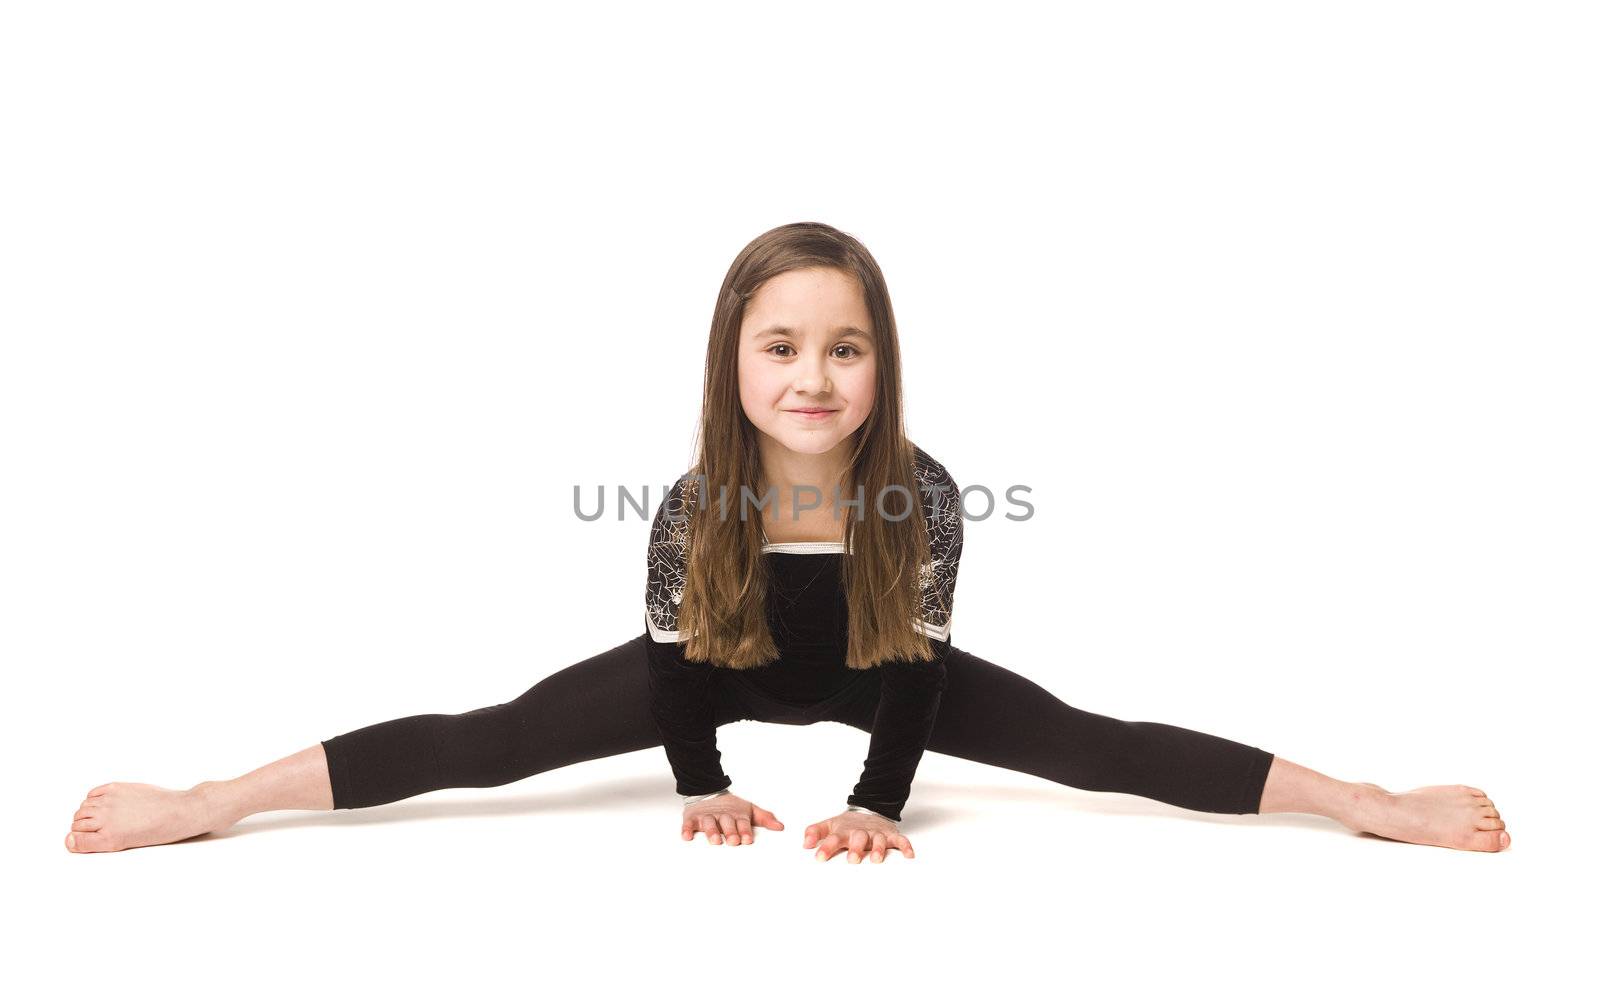 Young girl doing gymnastics by gemenacom